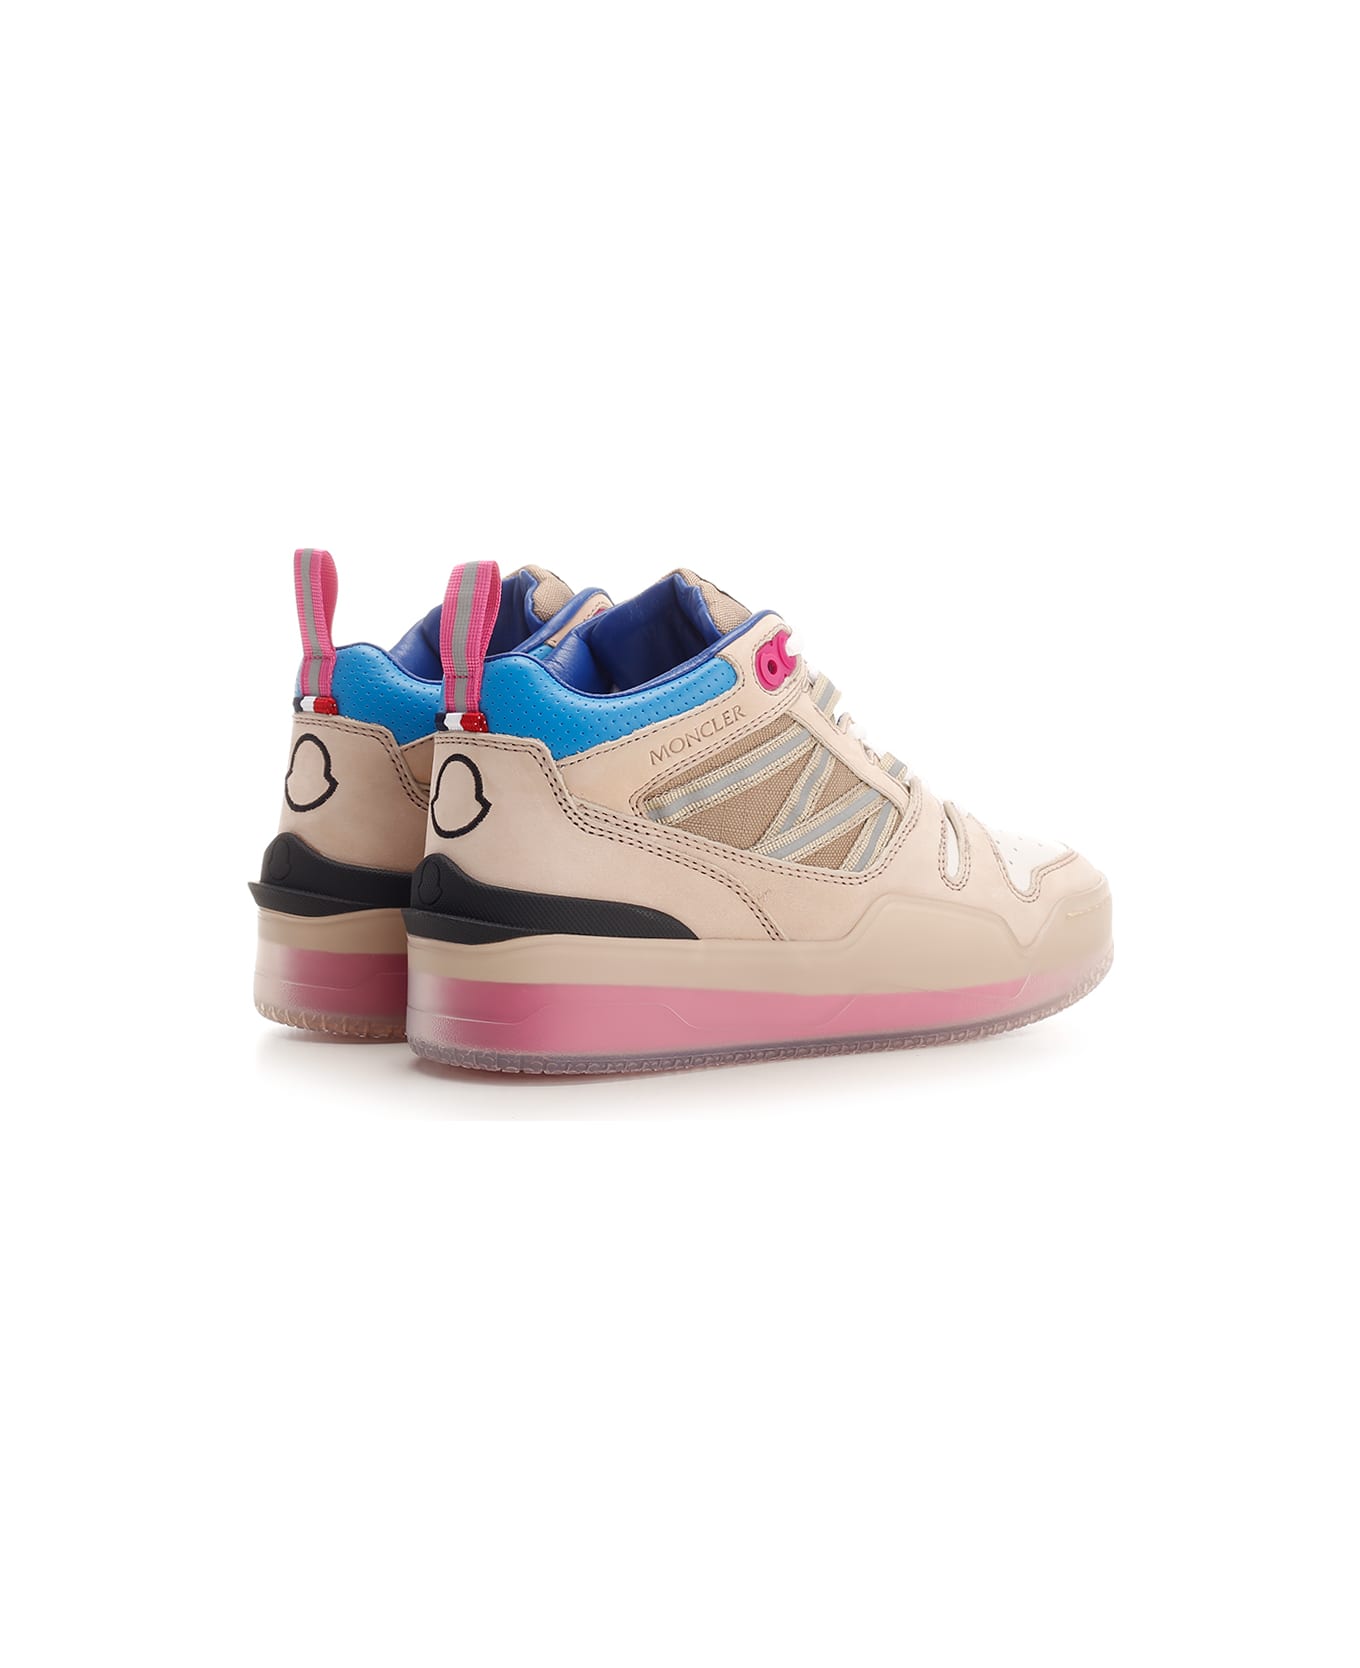 Moncler 'pivot' High Top Sneakers - Pink スニーカー